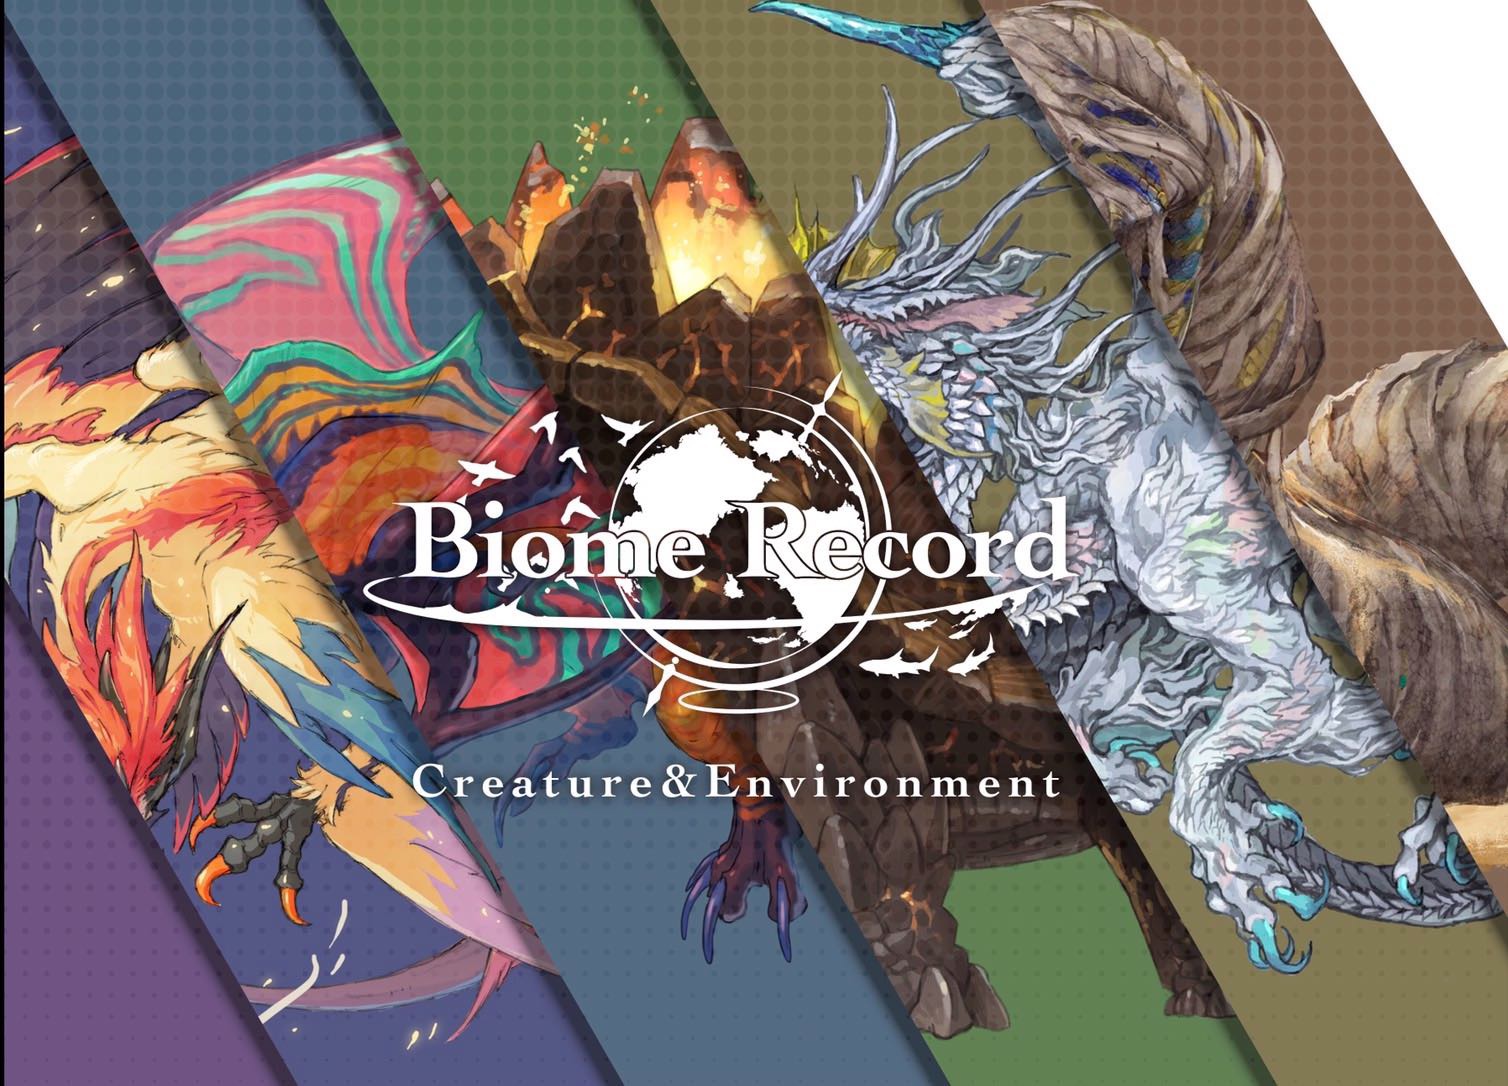 Biome Record (ゲスト参加)